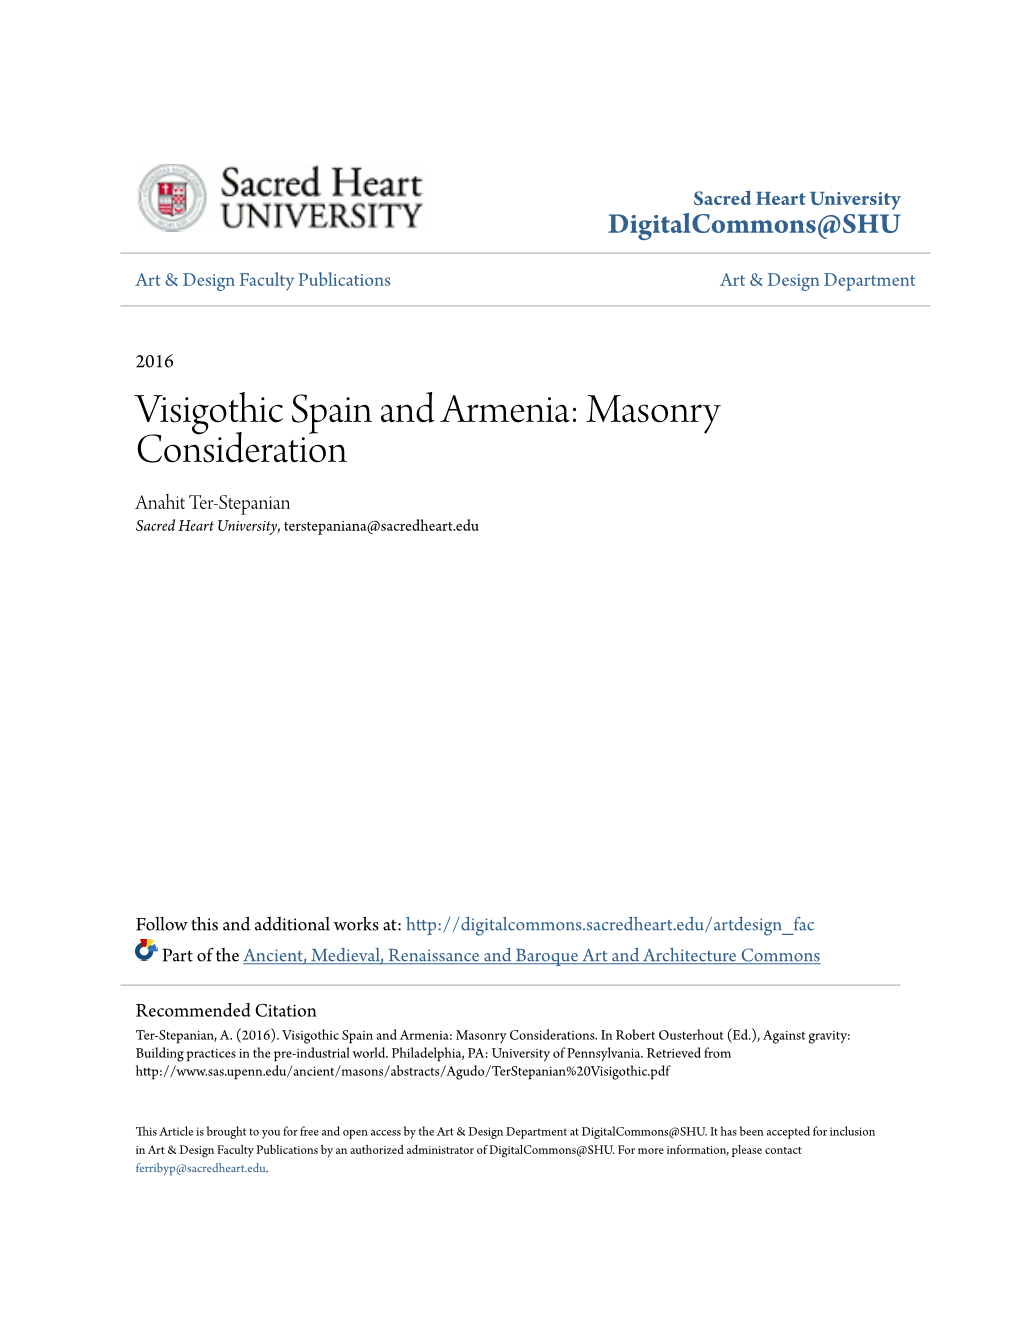 Visigothic Spain and Armenia: Masonry Consideration Anahit Ter-Stepanian Sacred Heart University, Terstepaniana@Sacredheart.Edu